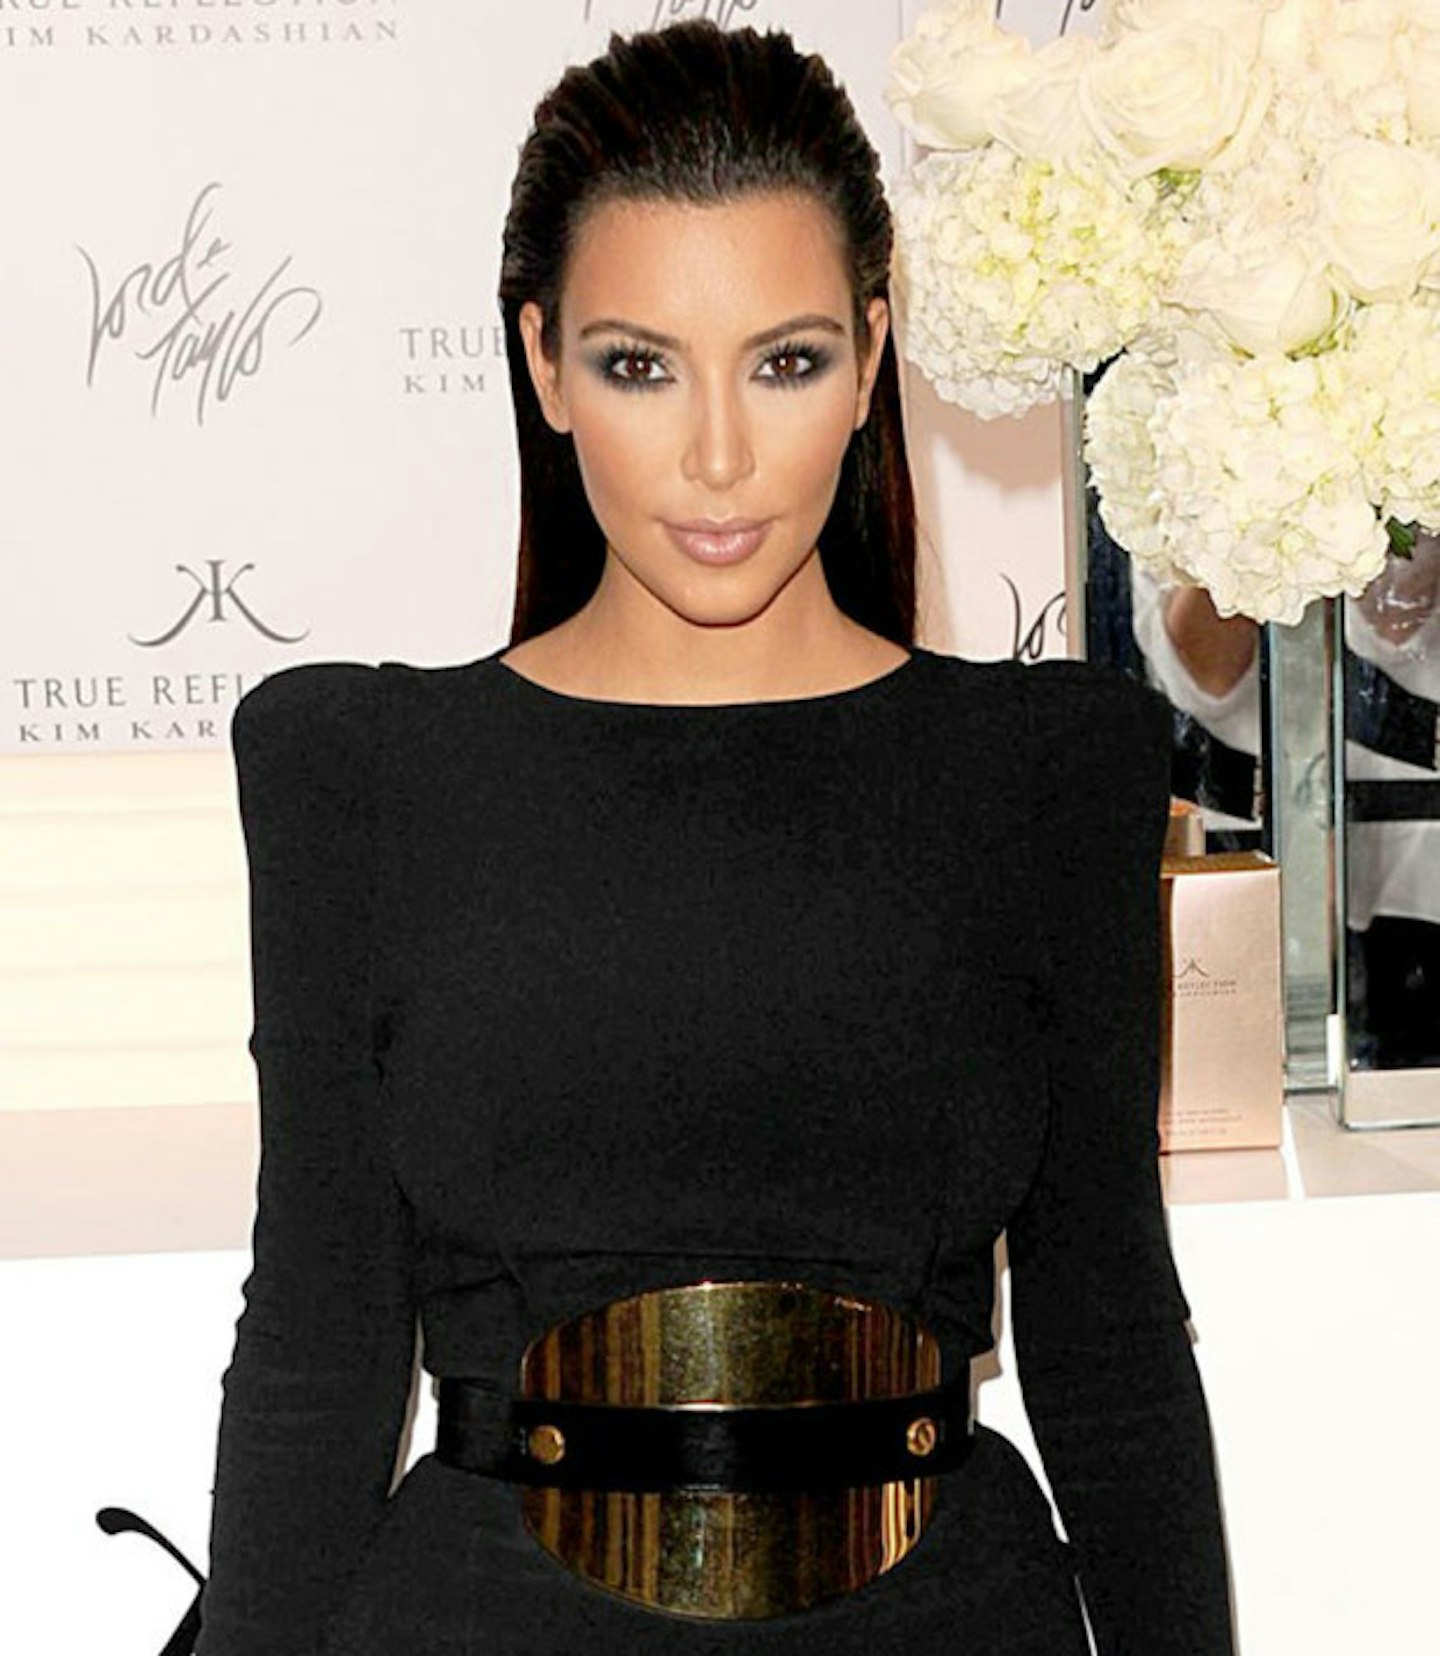 true-reflection-kim-kardashian-black-dress